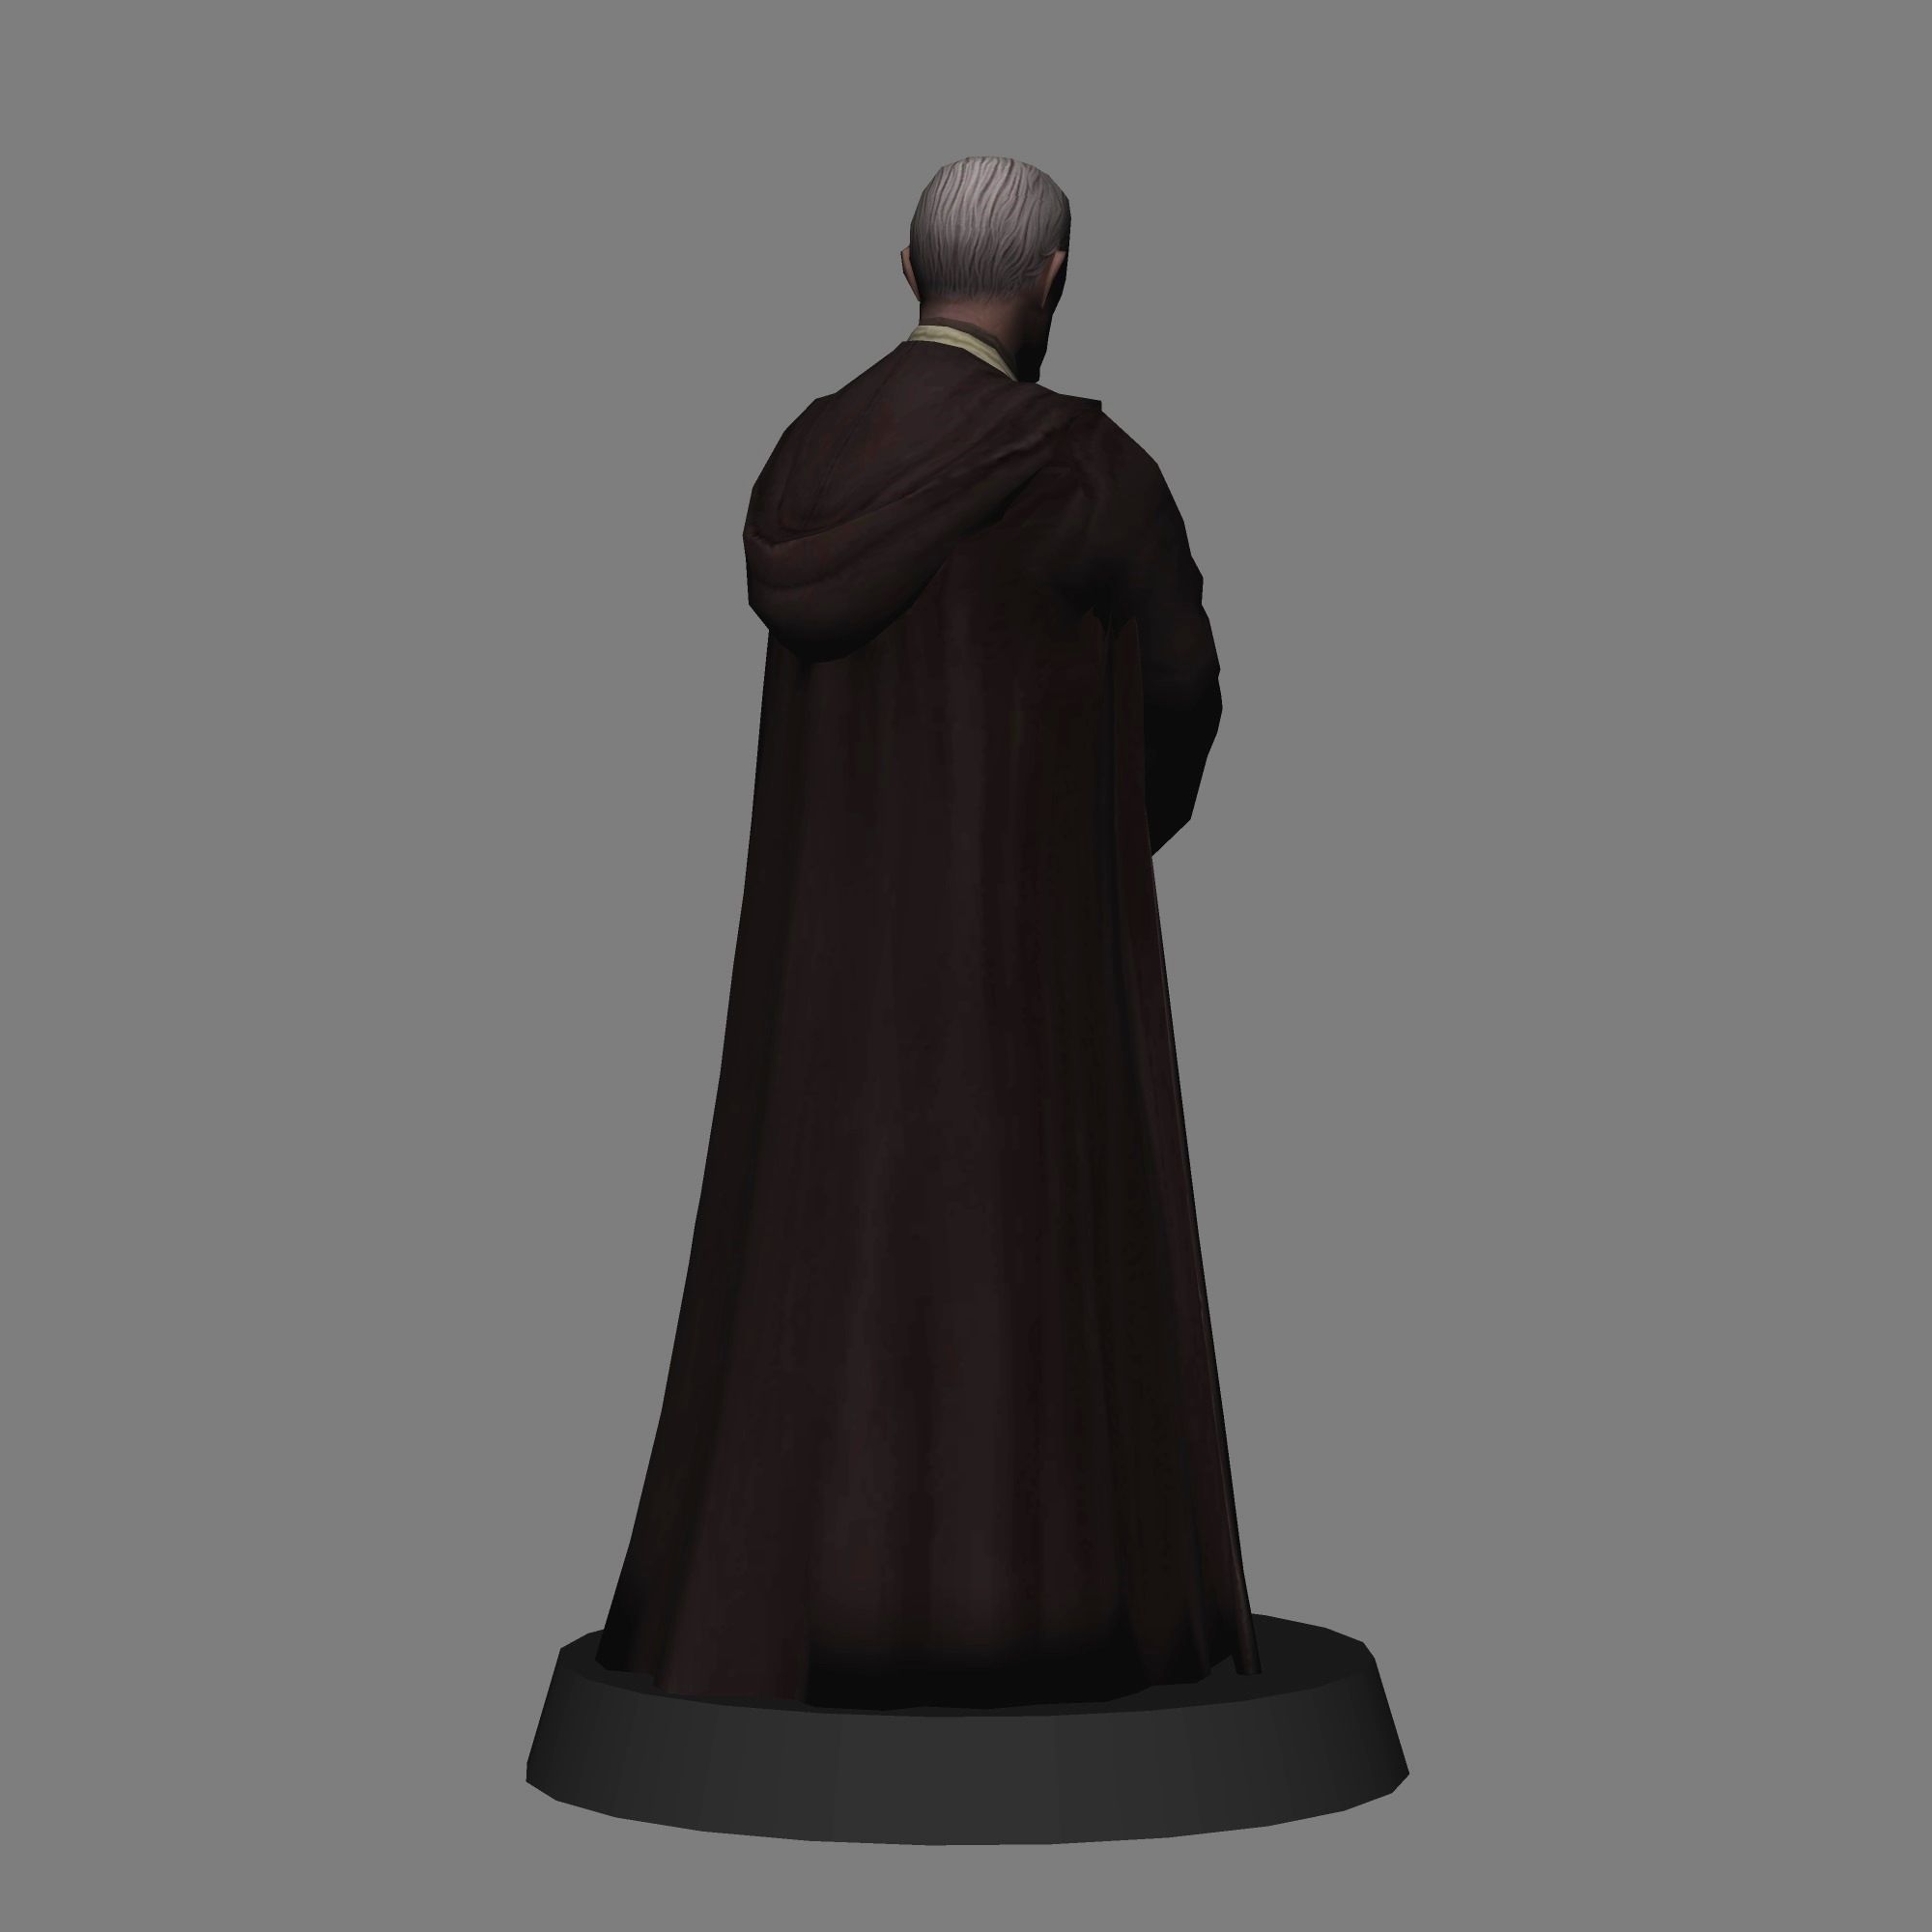 03.jpg Télécharger fichier STL Obi Wan Kenobi - Starwars LOW POLY 3D PRINT • Modèle à imprimer en 3D, TonMcu